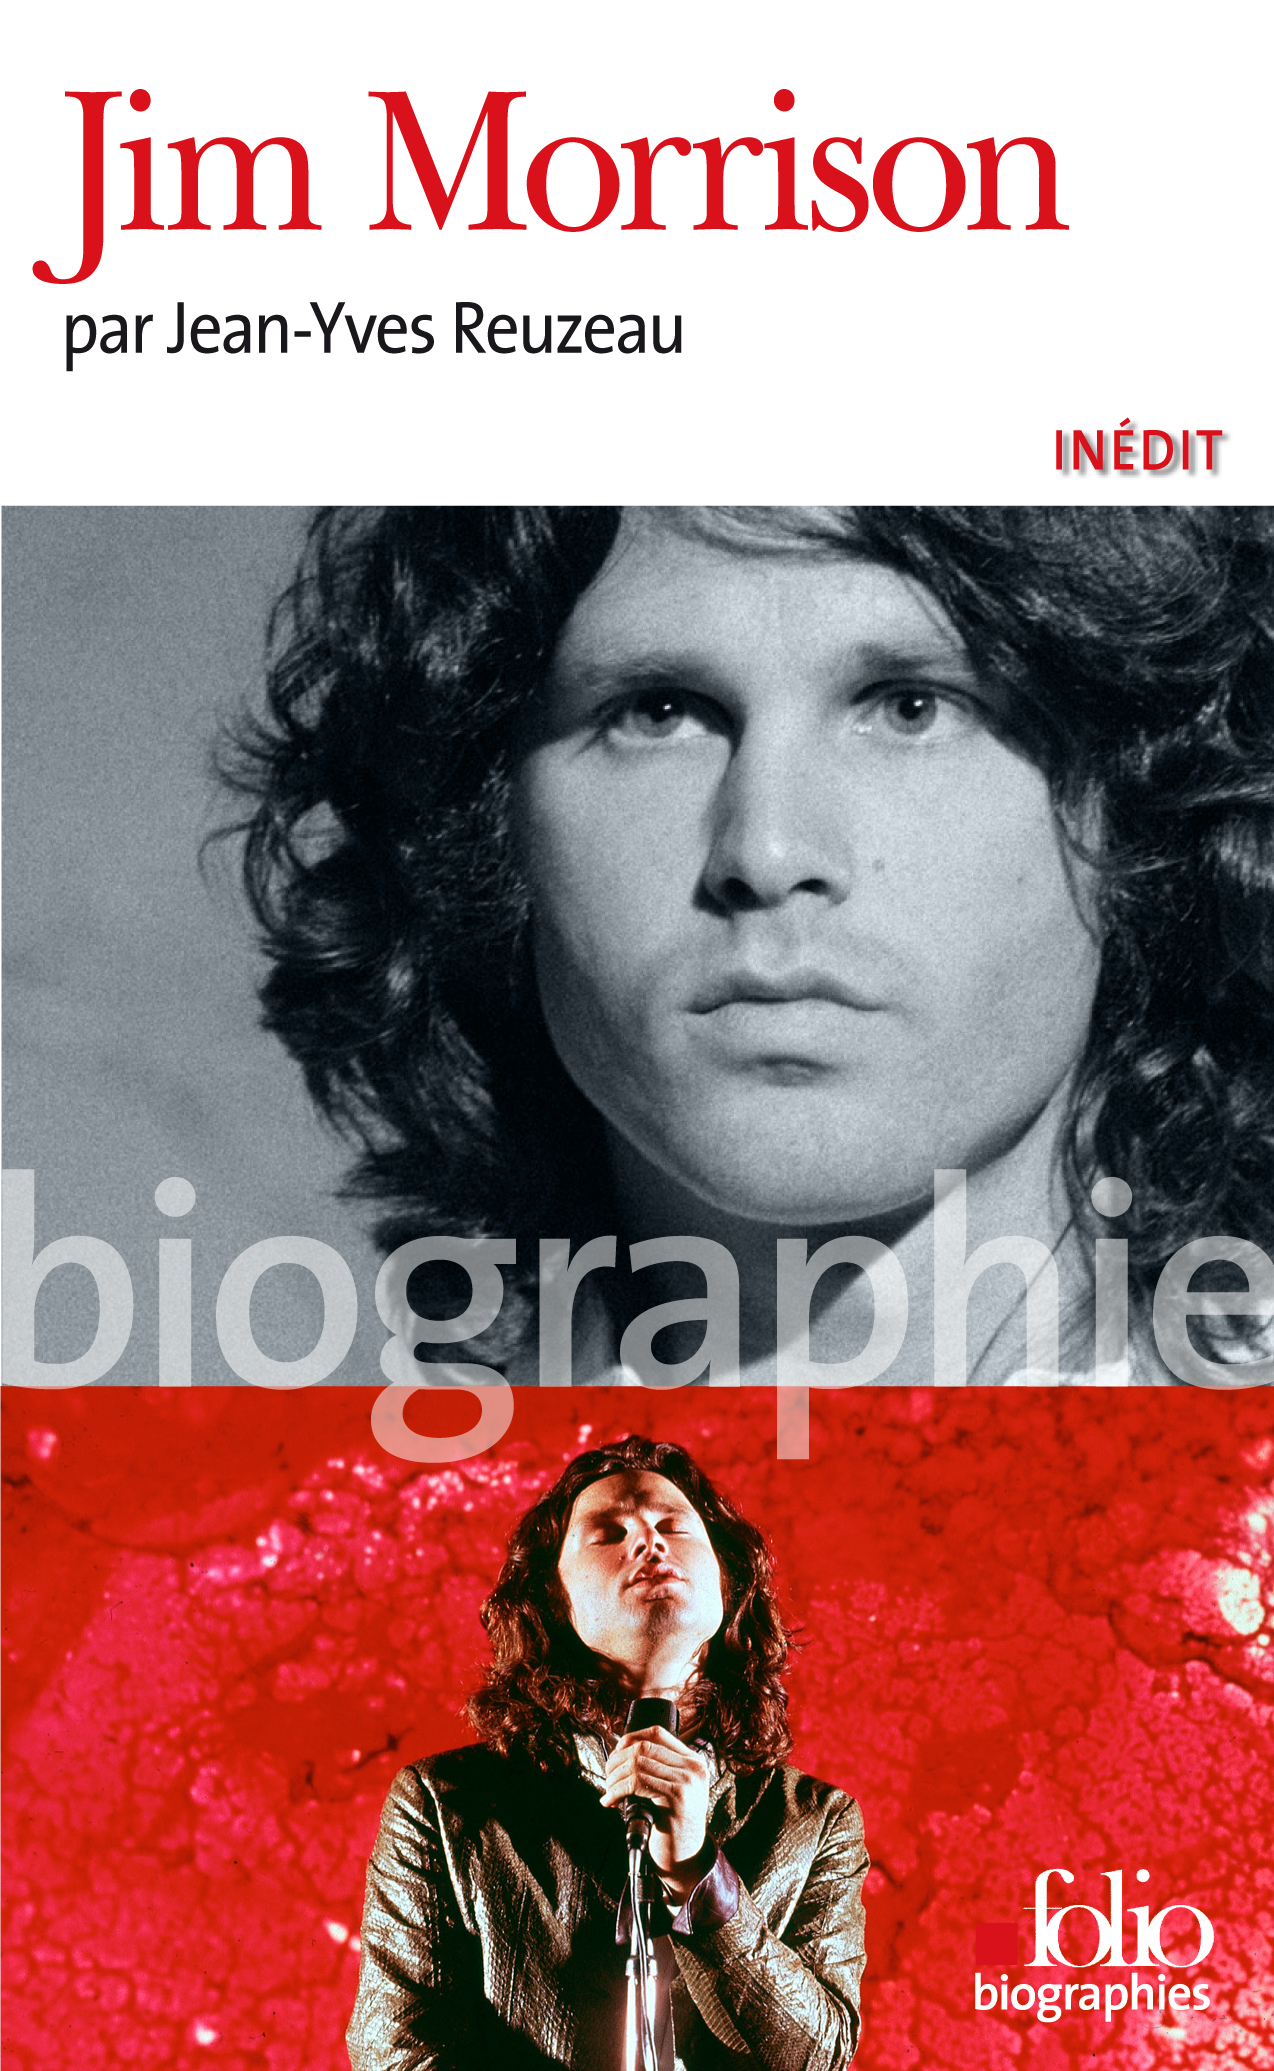 Jim Morrison (9782070346844-front-cover)